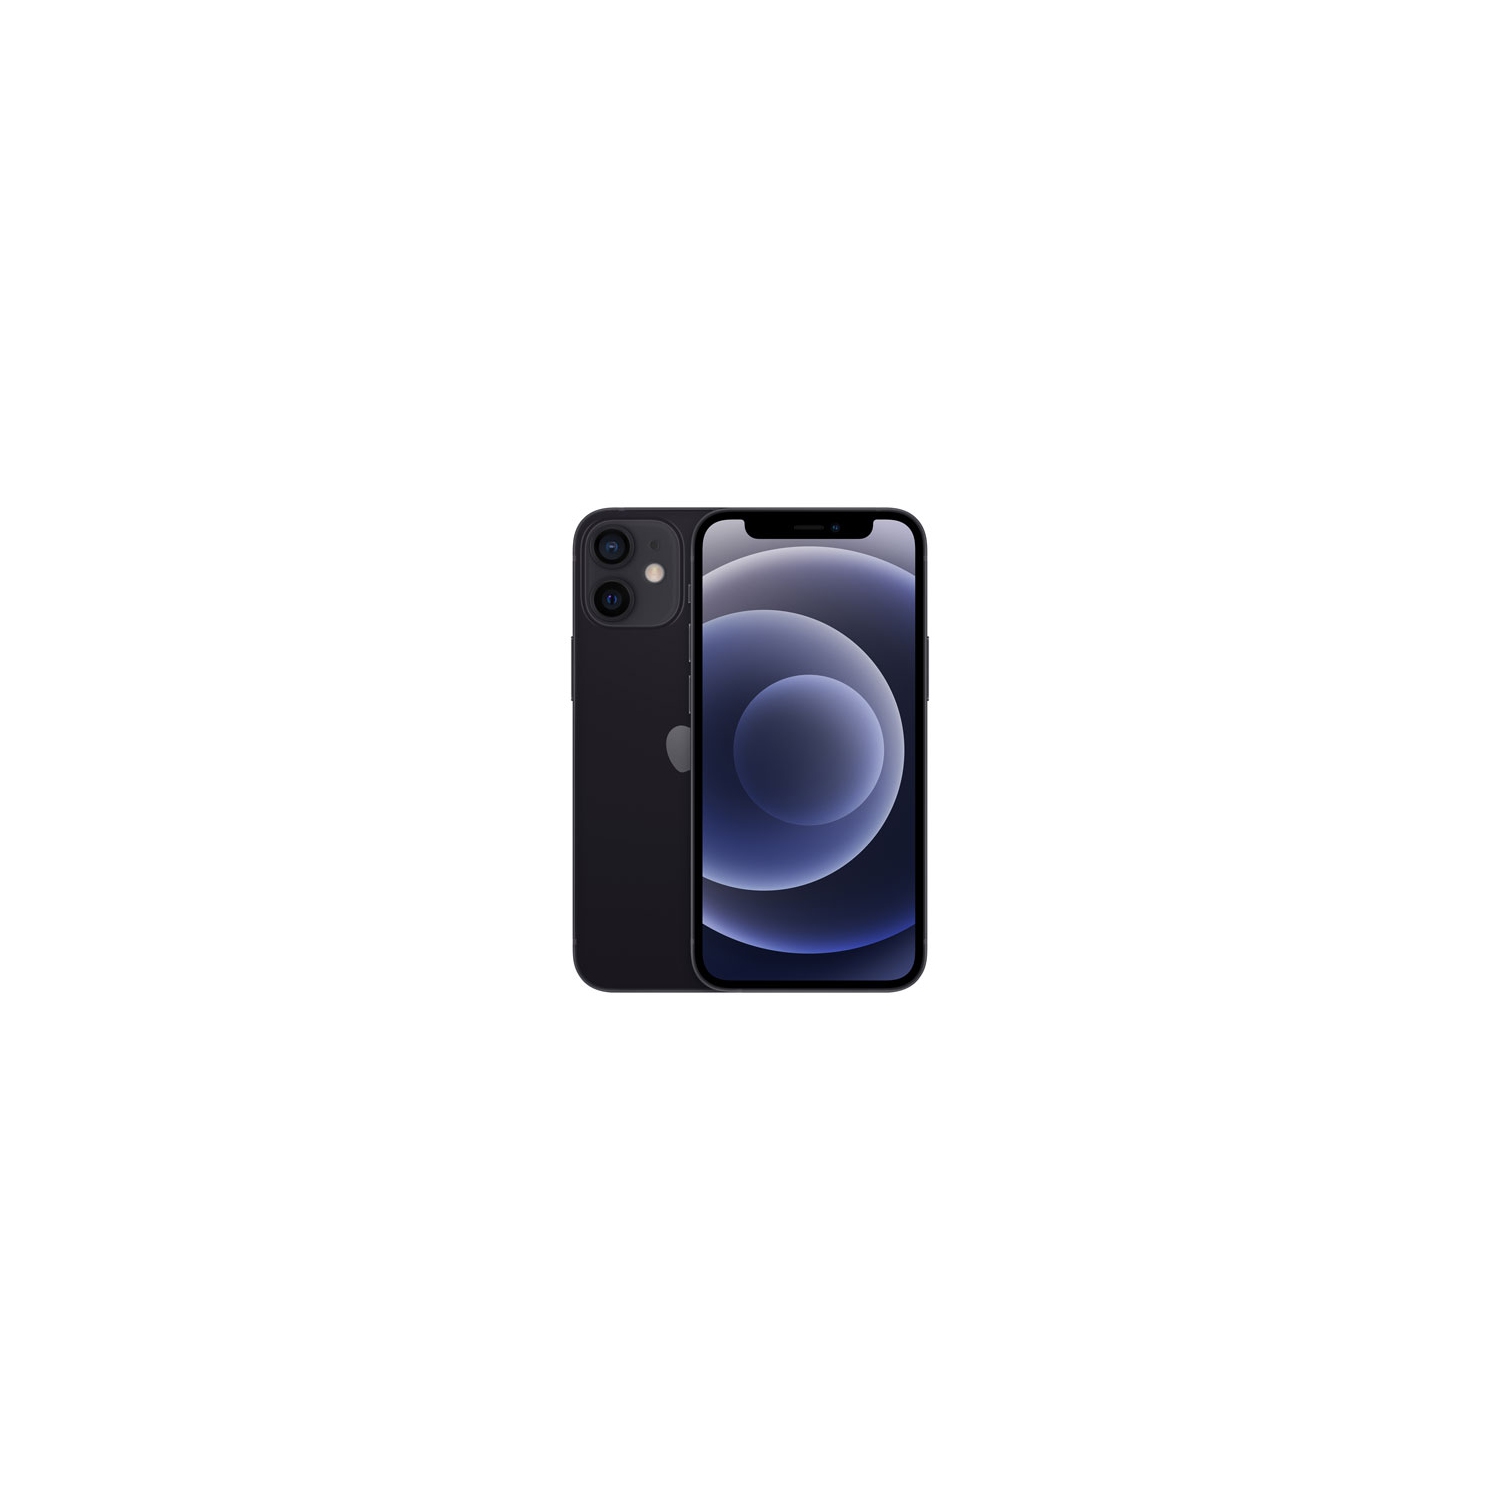 Apple iPhone 12 mini 128GB Smartphone - Black - Unlocked - Open Box